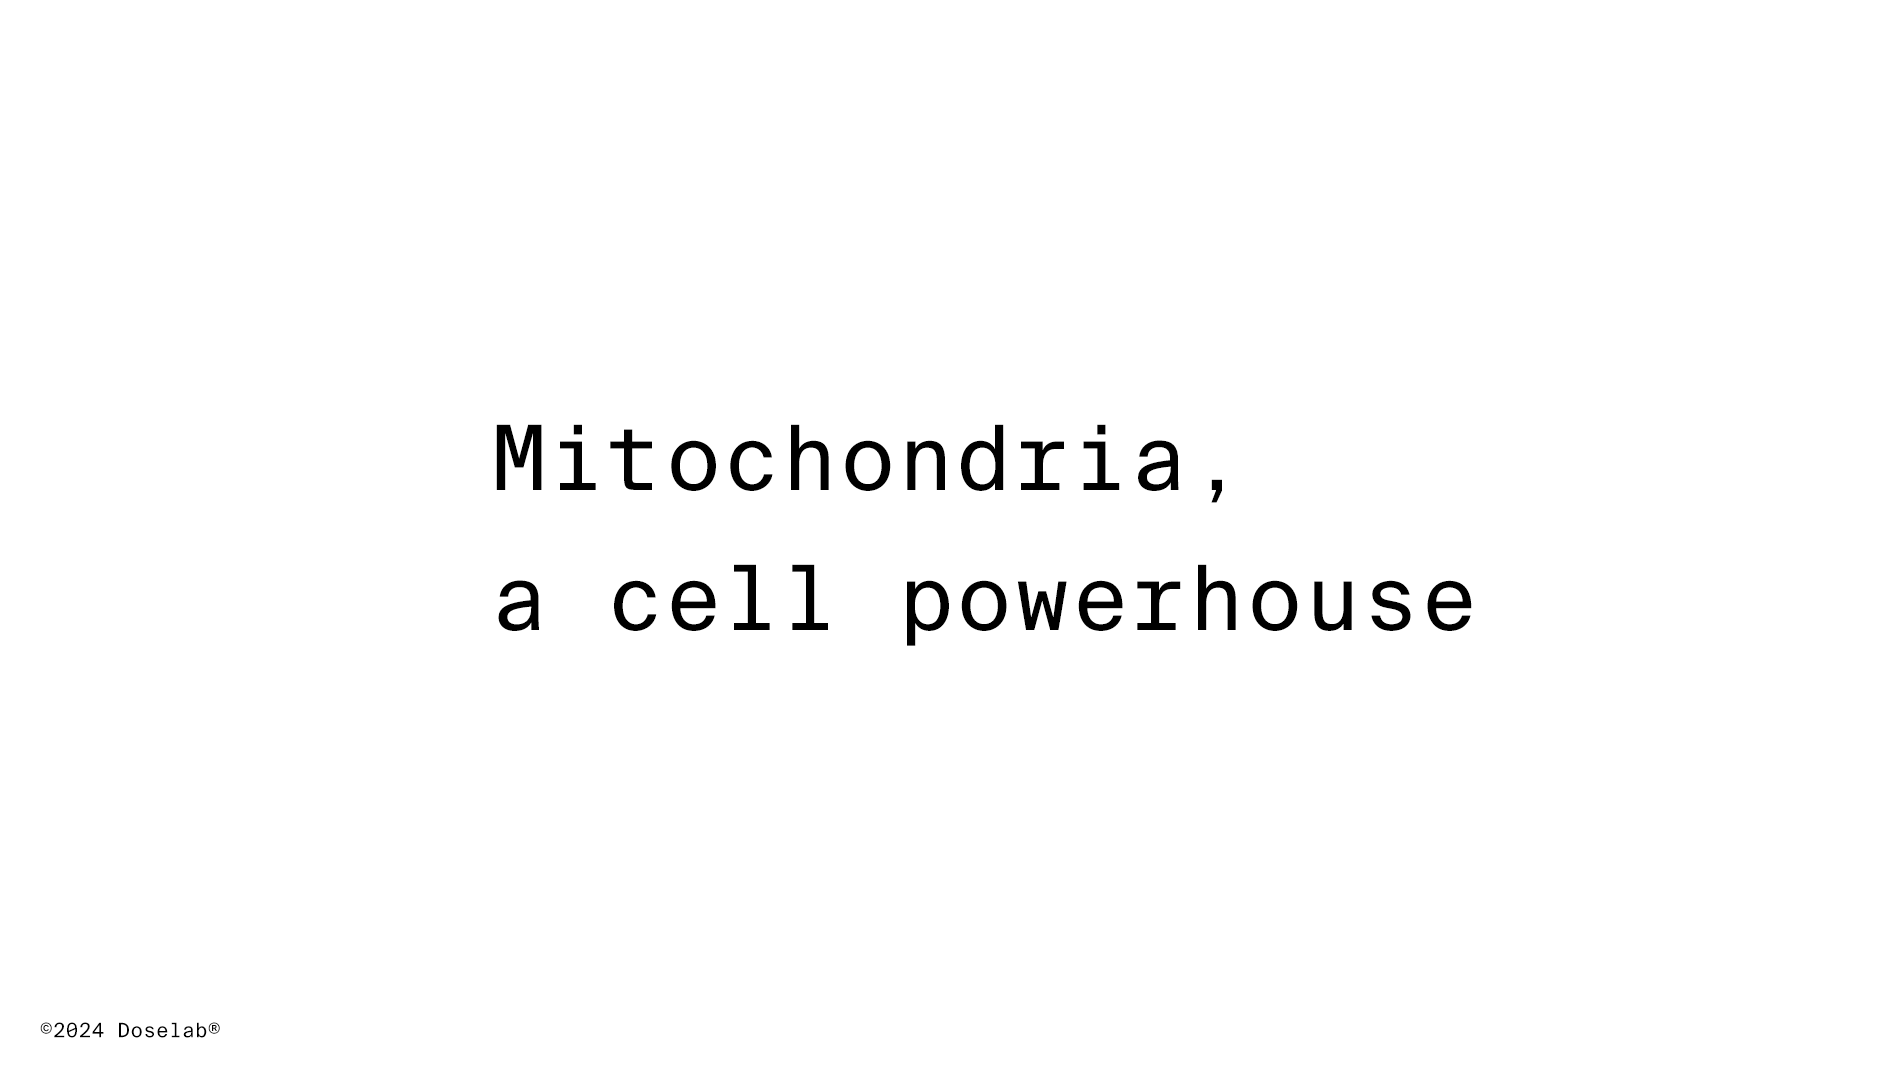 Mitochondria, a cell powerhouse